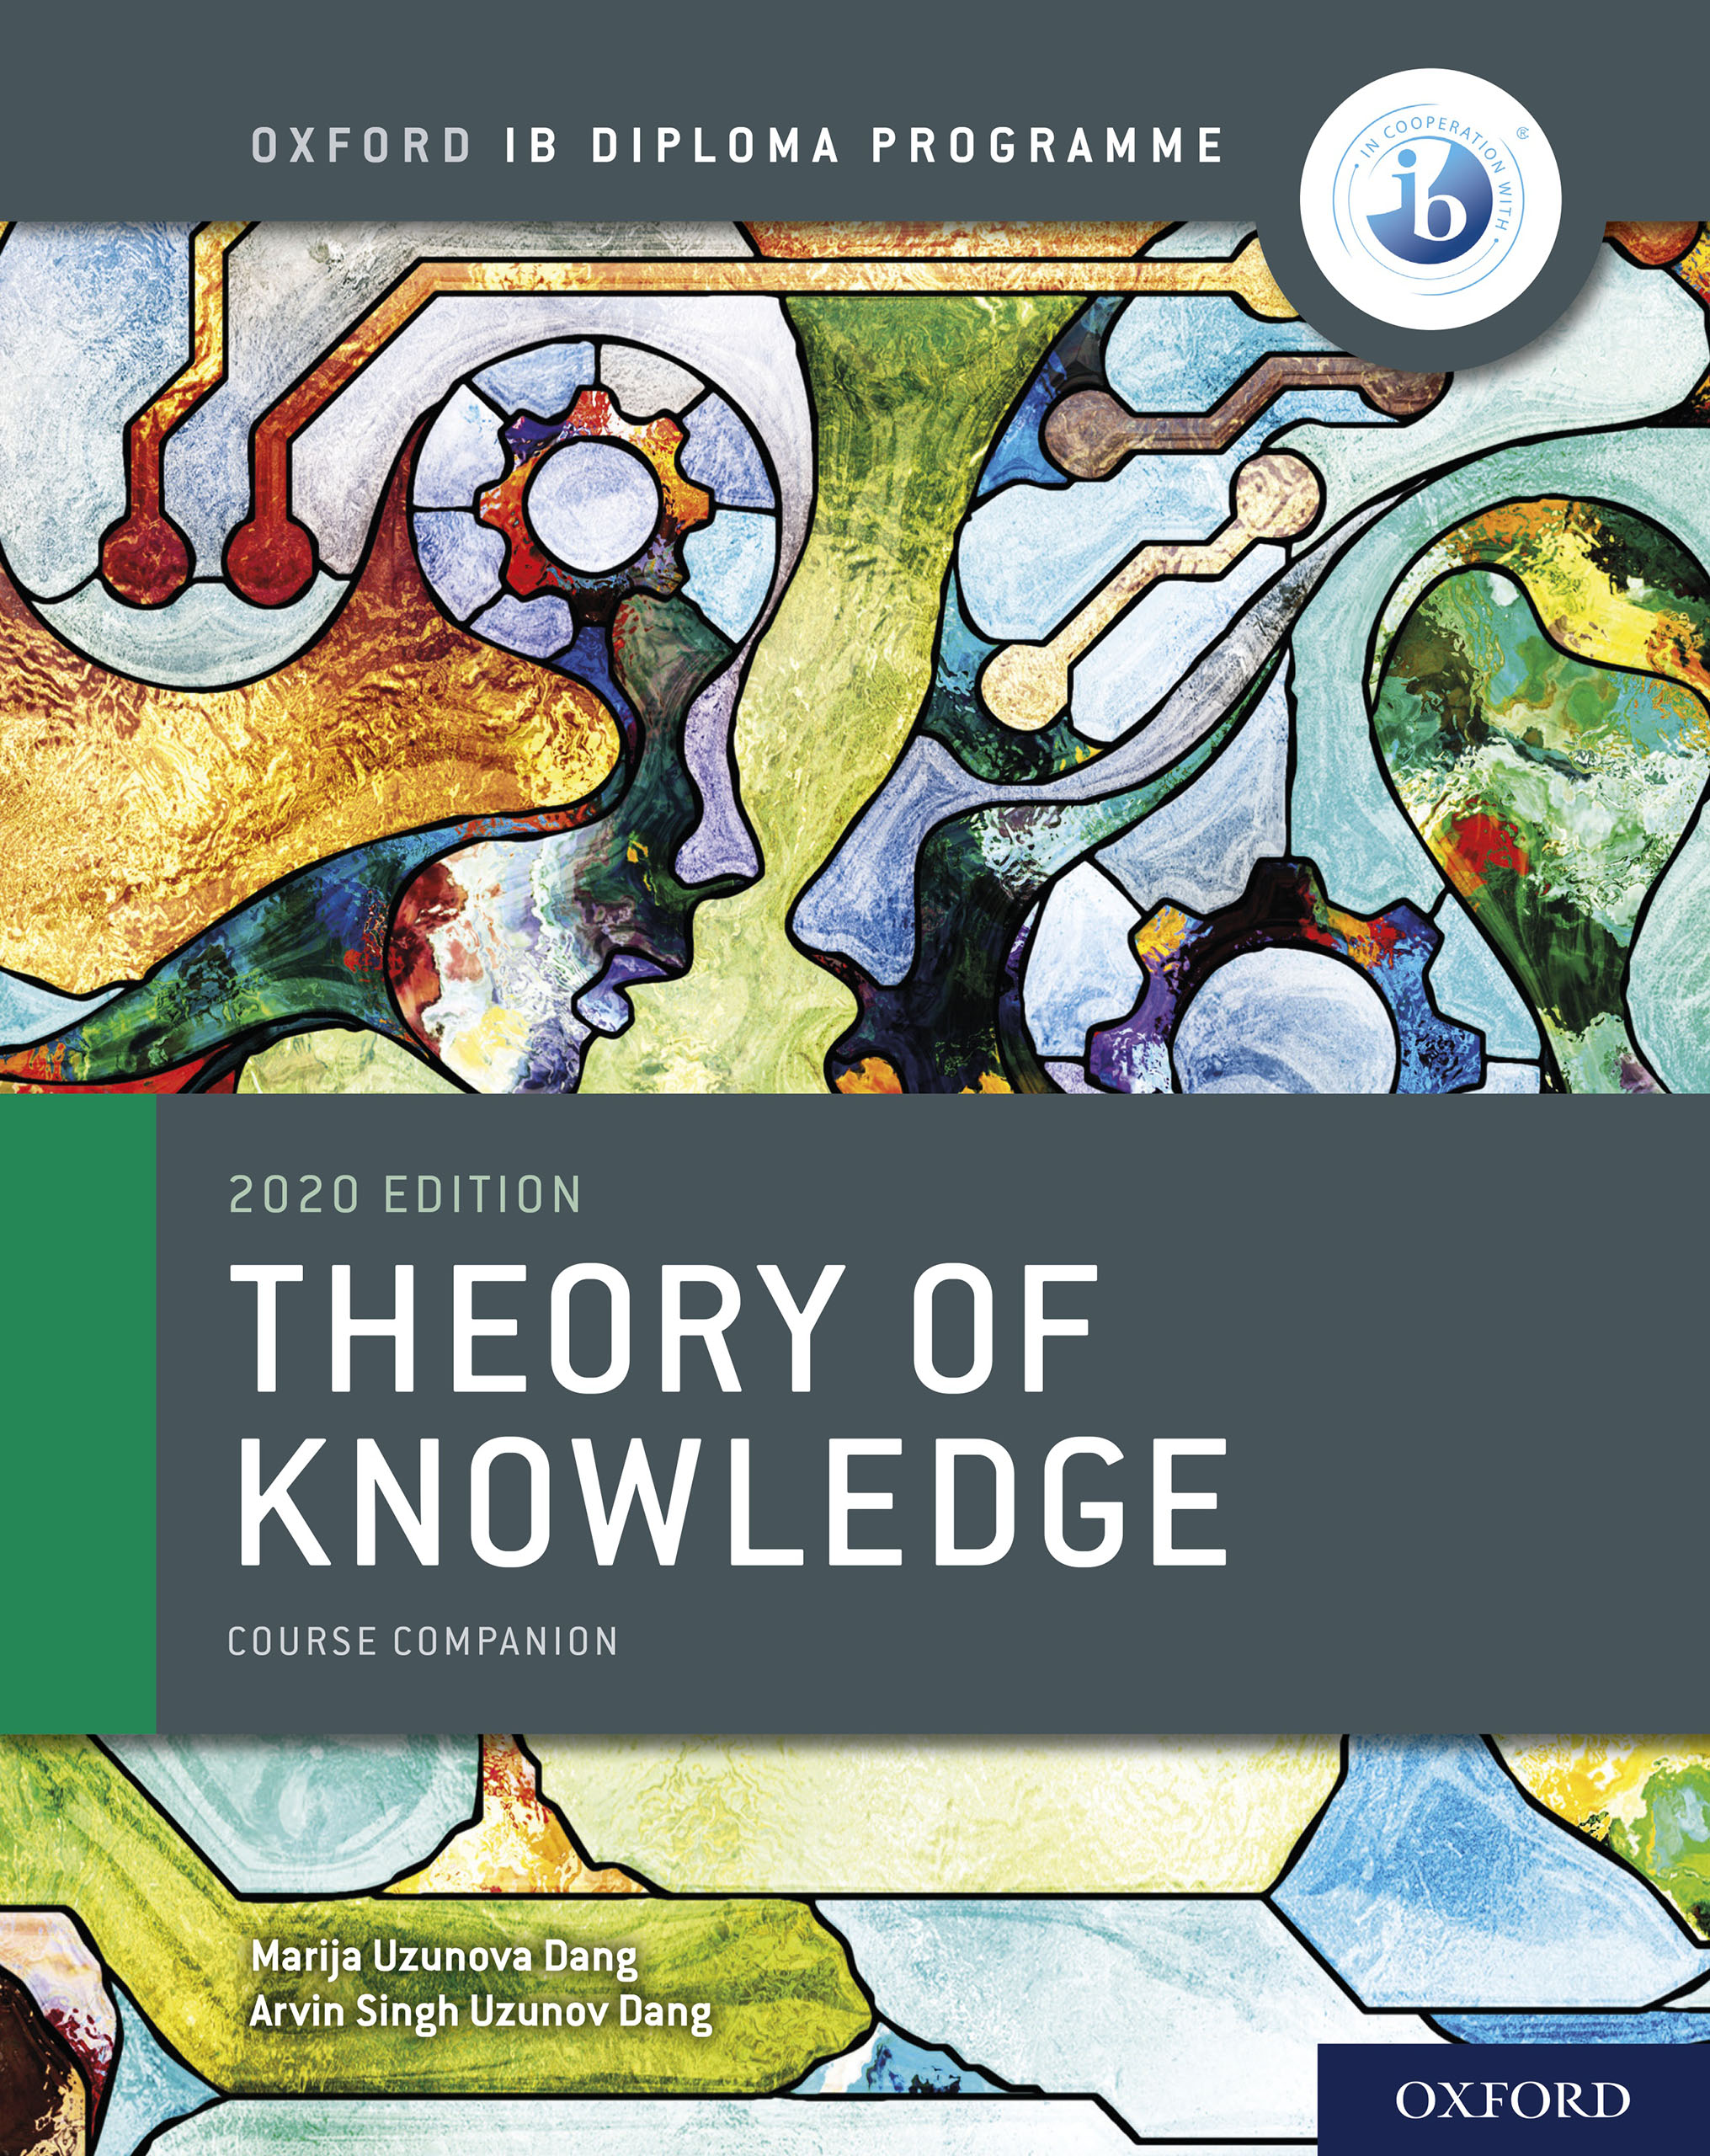 ib theory of knowledge essay questions pdf